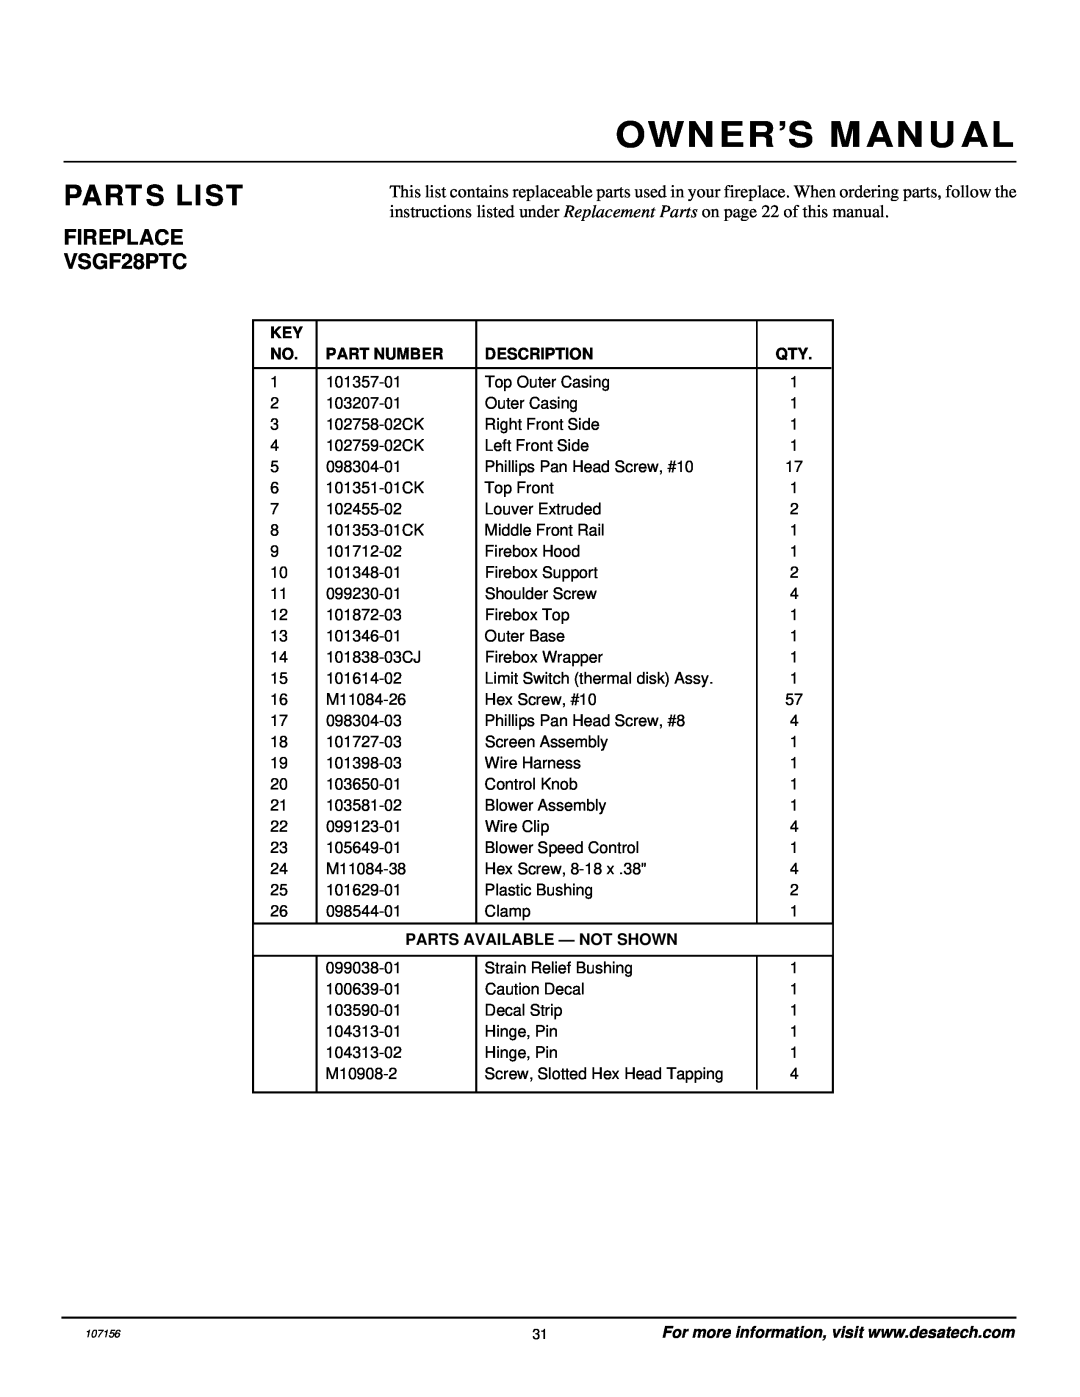 Vanguard Heating VSGF28PVA Parts List, FIREPLACE VSGF28PTC, Part Number, Description, Parts Available - Not Shown 